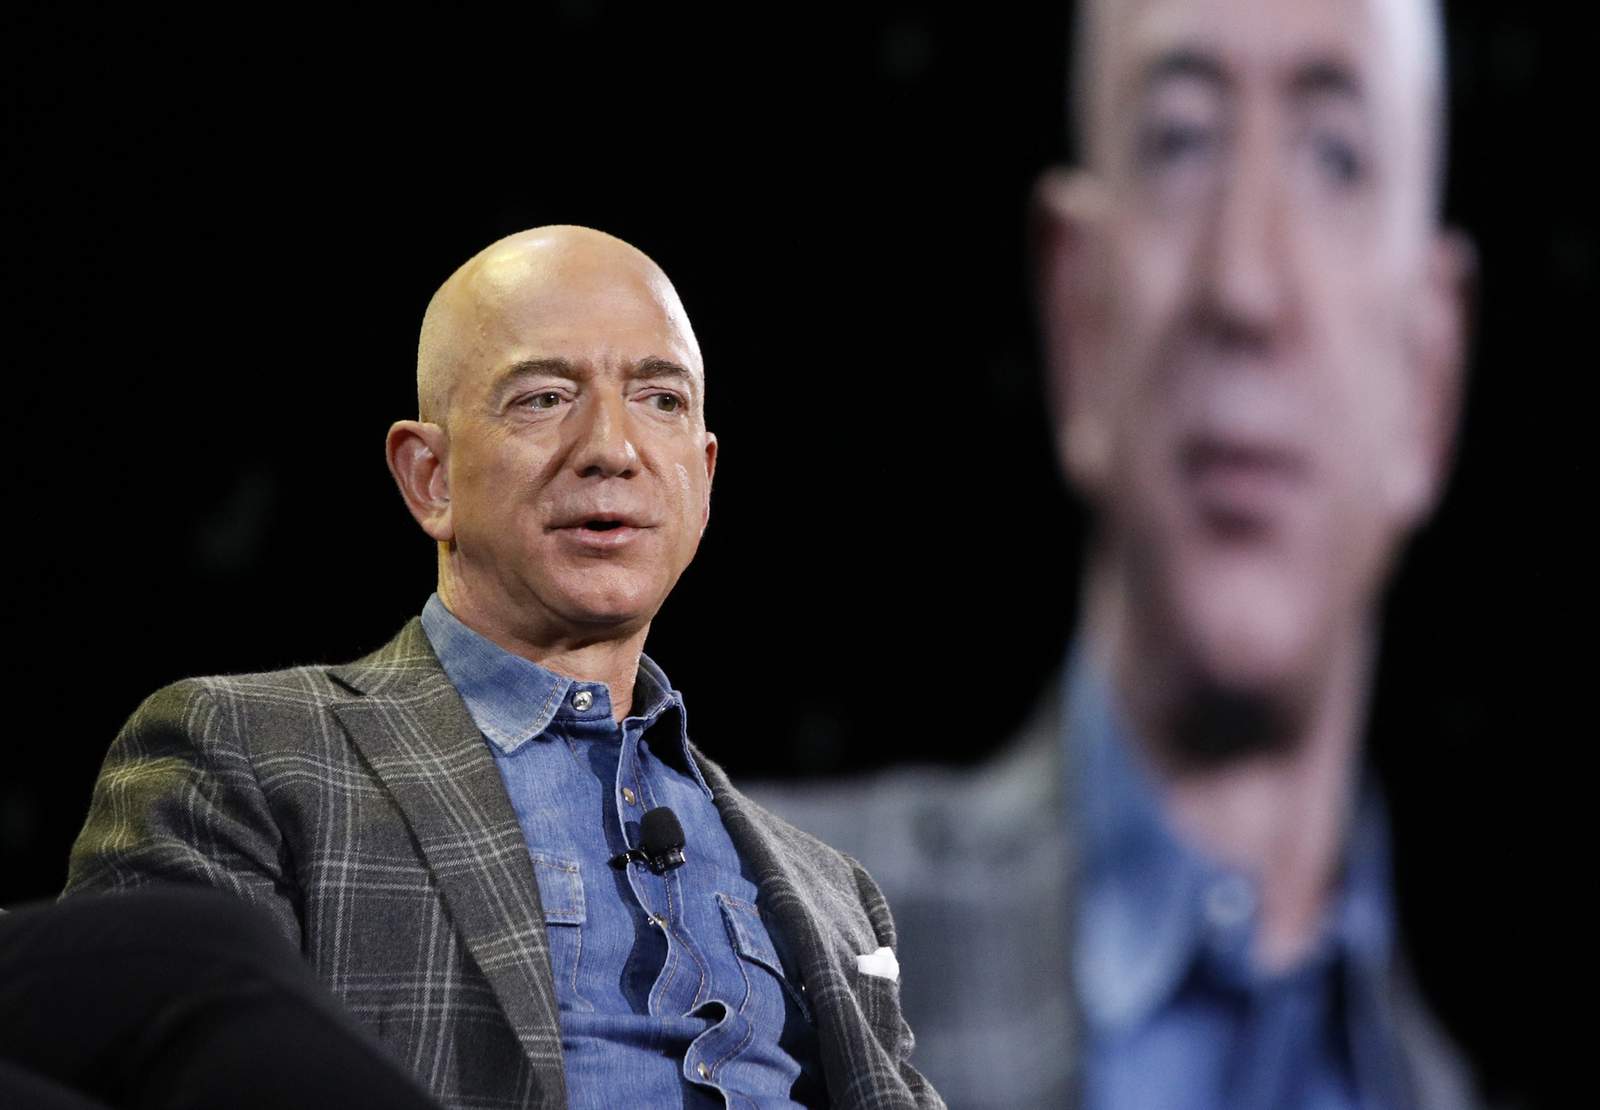 Jeff Bezos stepping down as CEO of Amazon